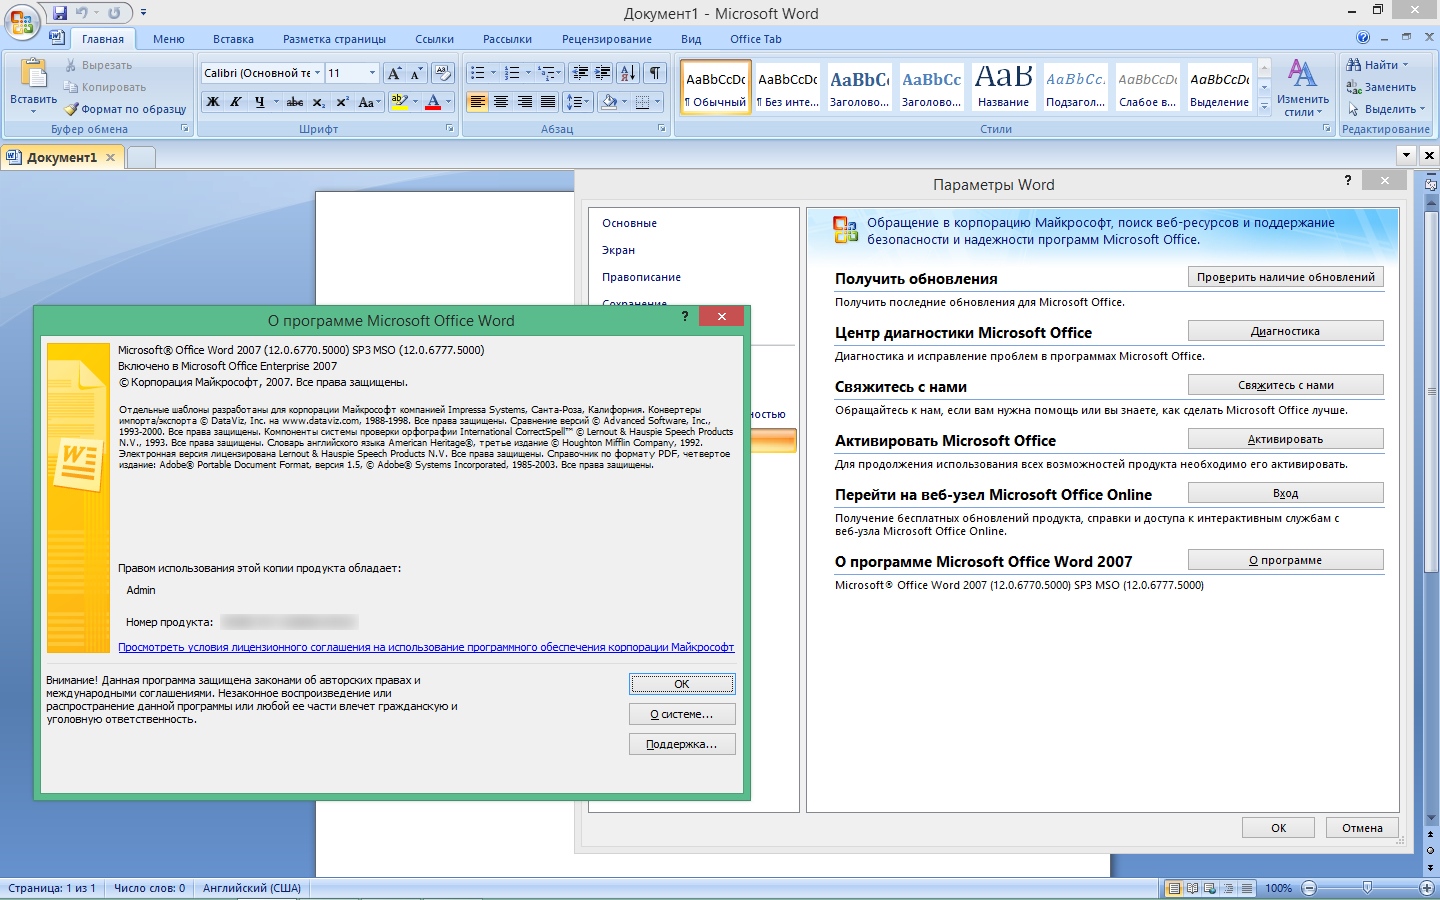 Microsoft Office 2007 Enterprise Download for Windows